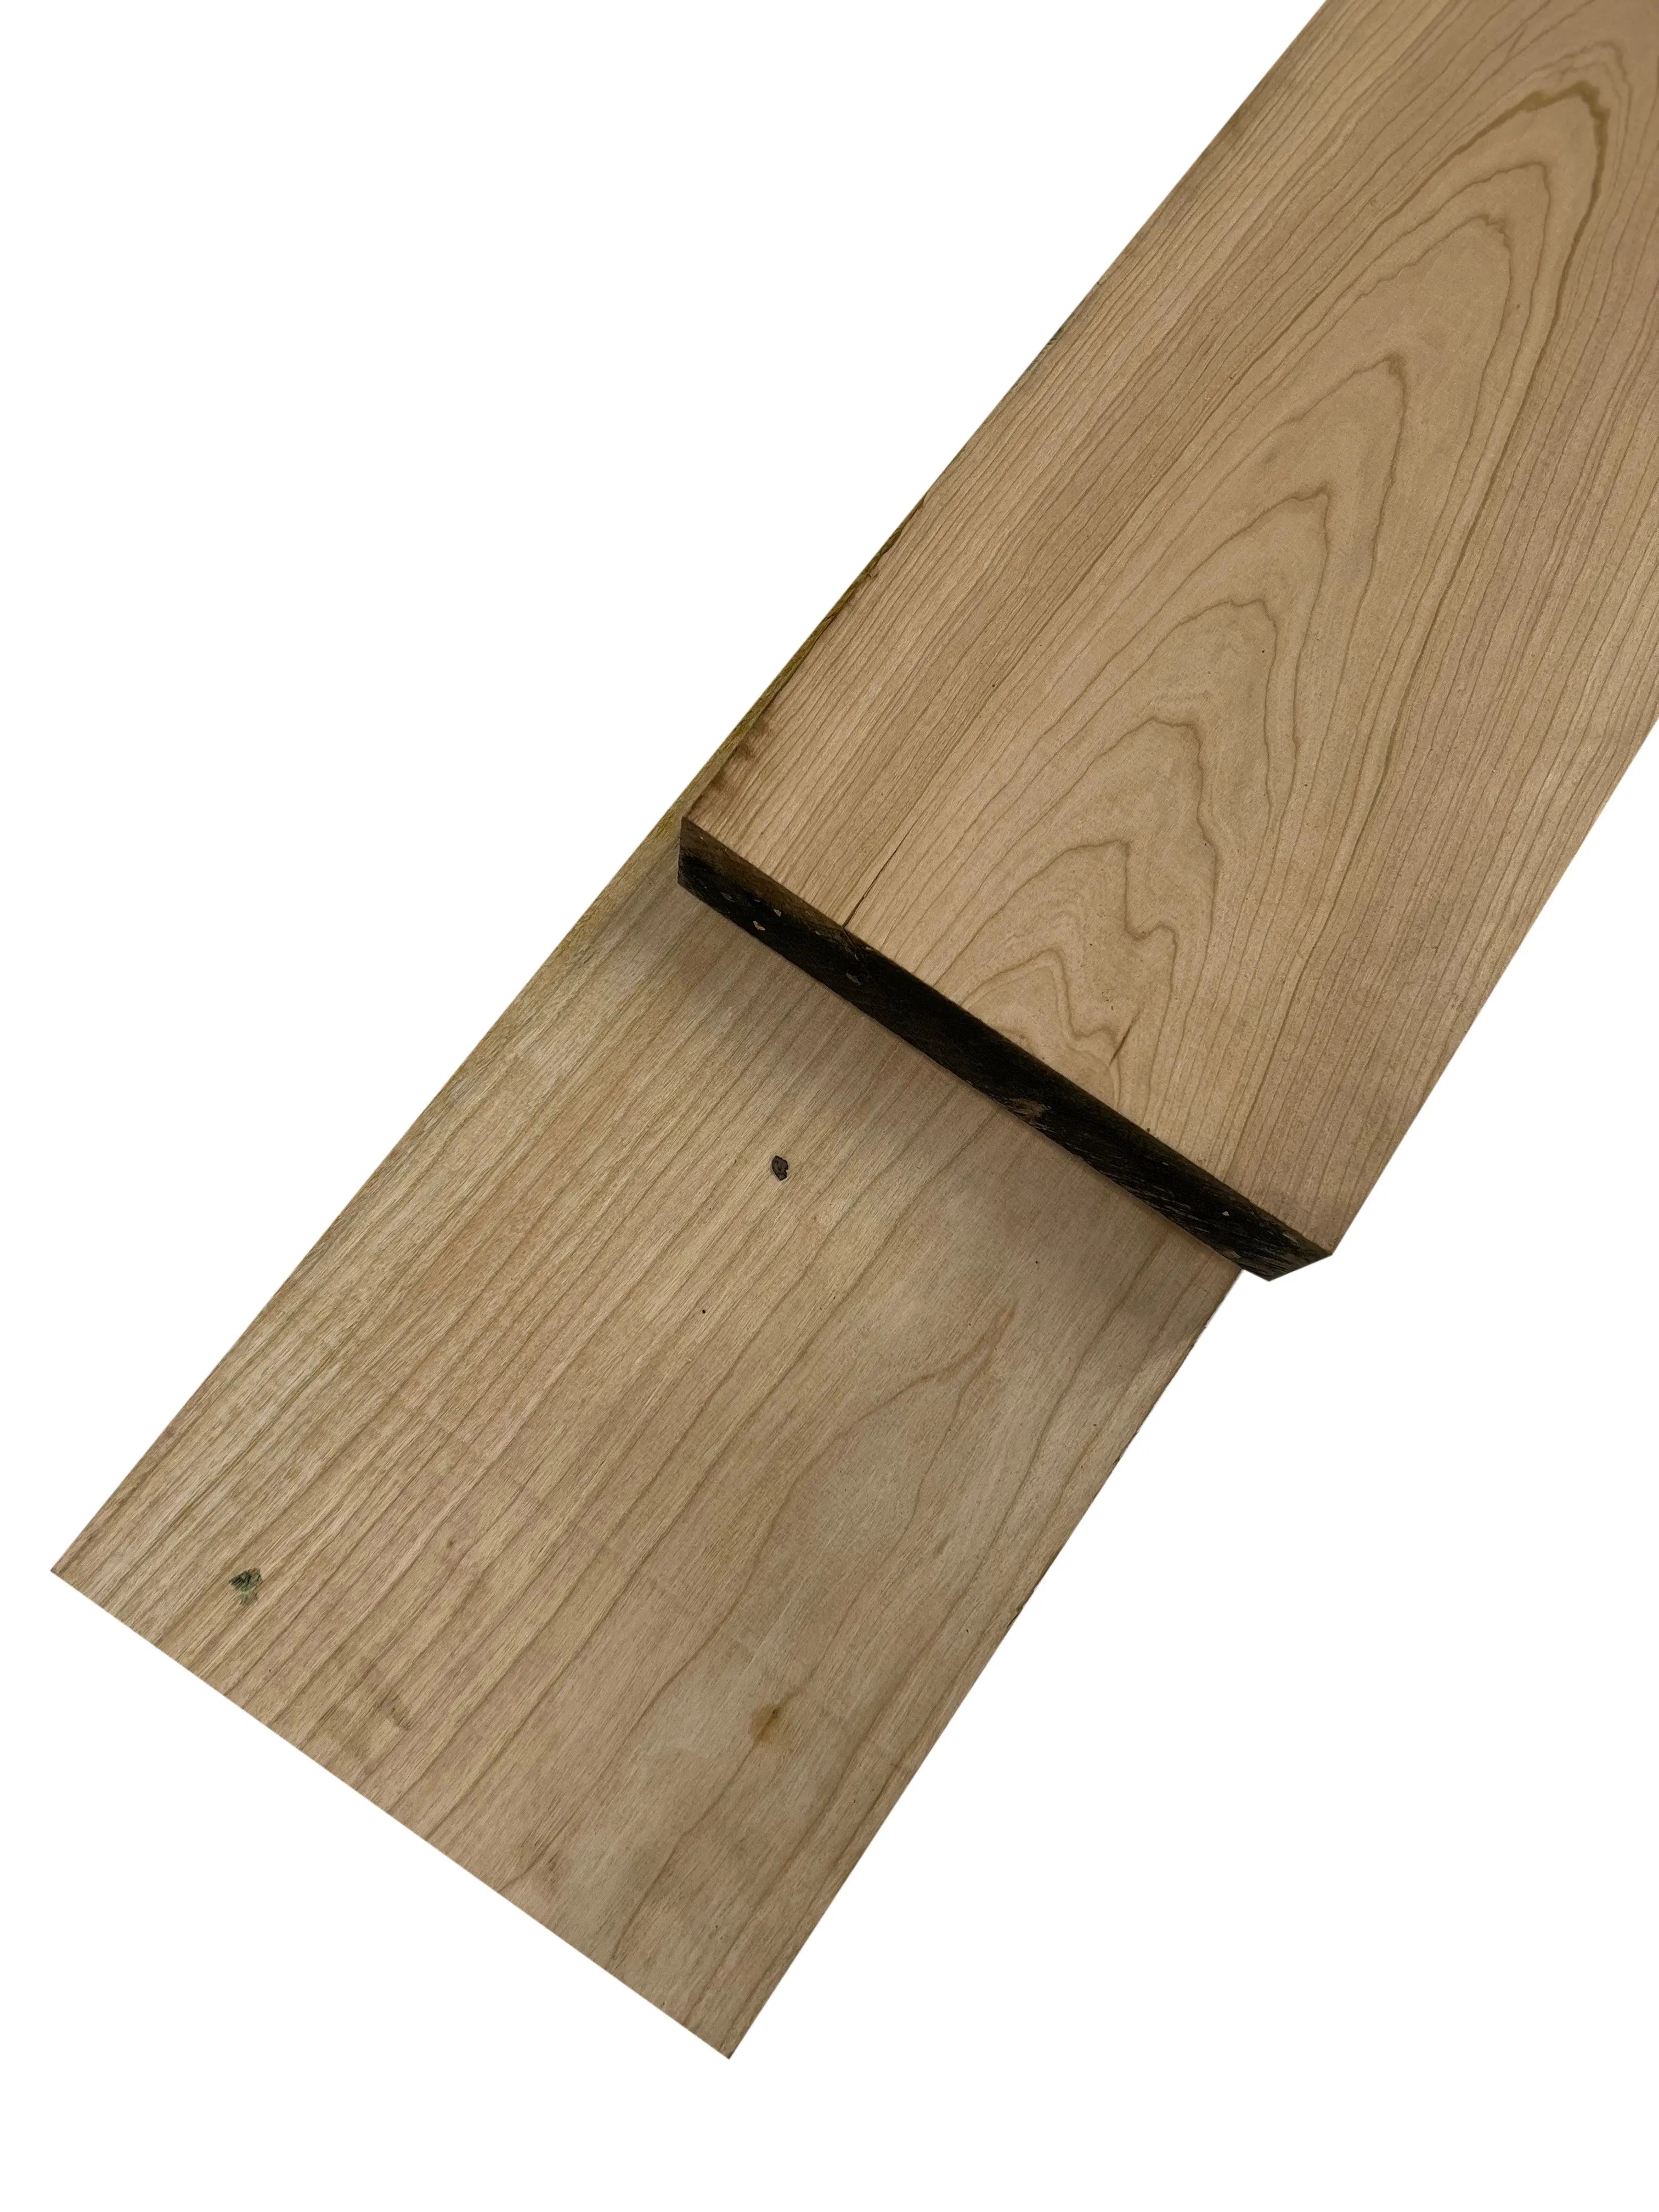 4/4 (13/16) Hard Maple - Dimensional Lumber